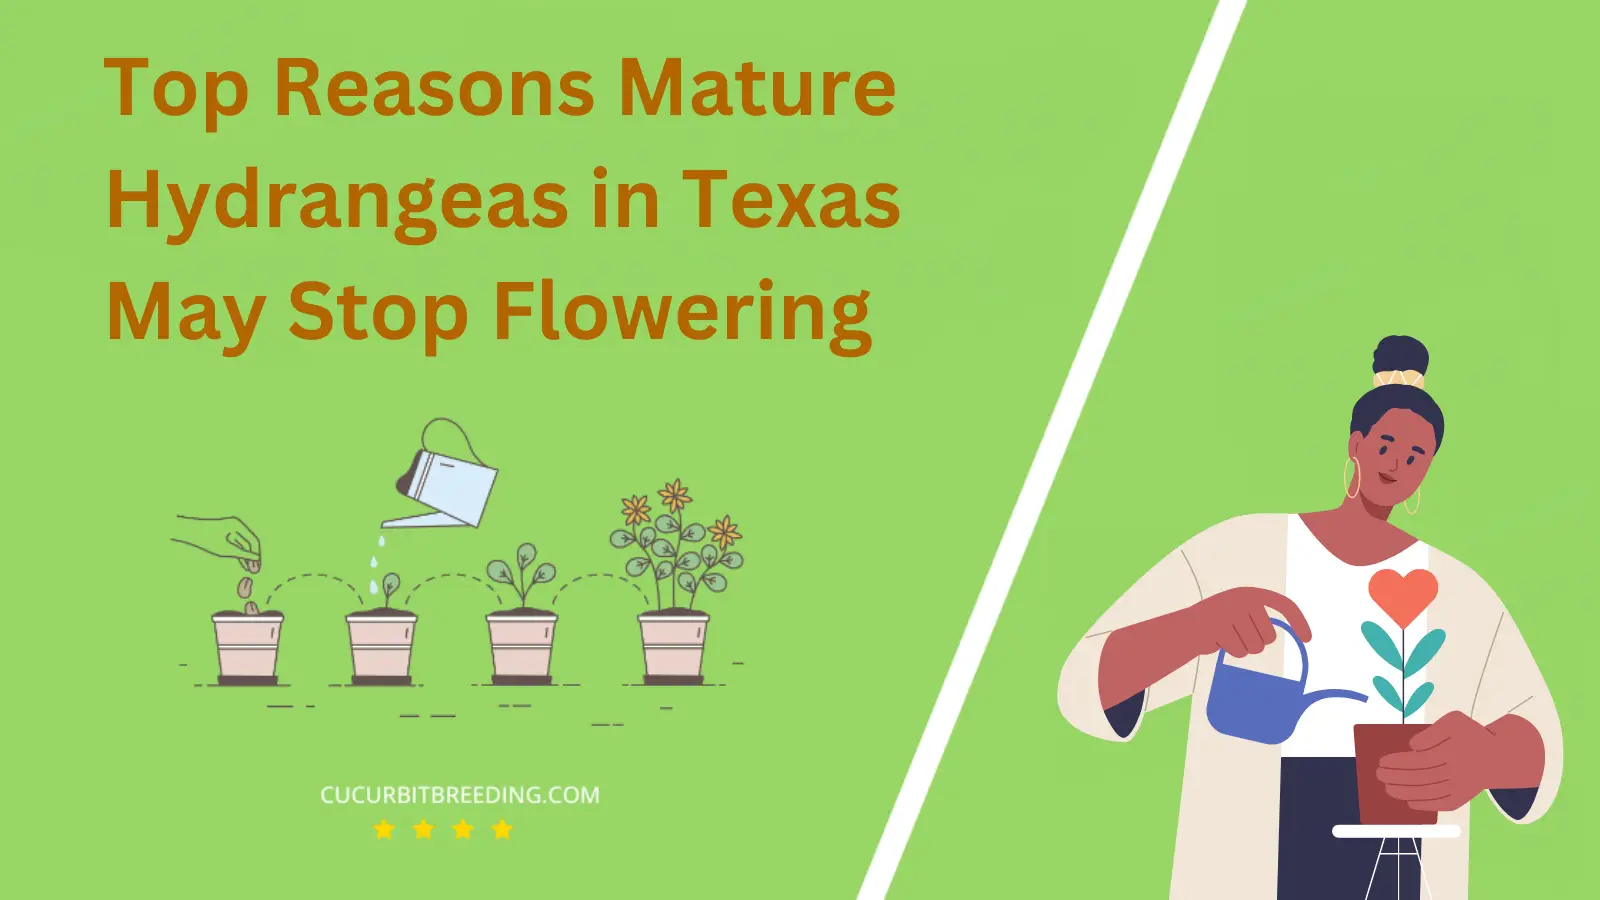 Top Reasons Mature Hydrangeas in Texas May Stop Flowering